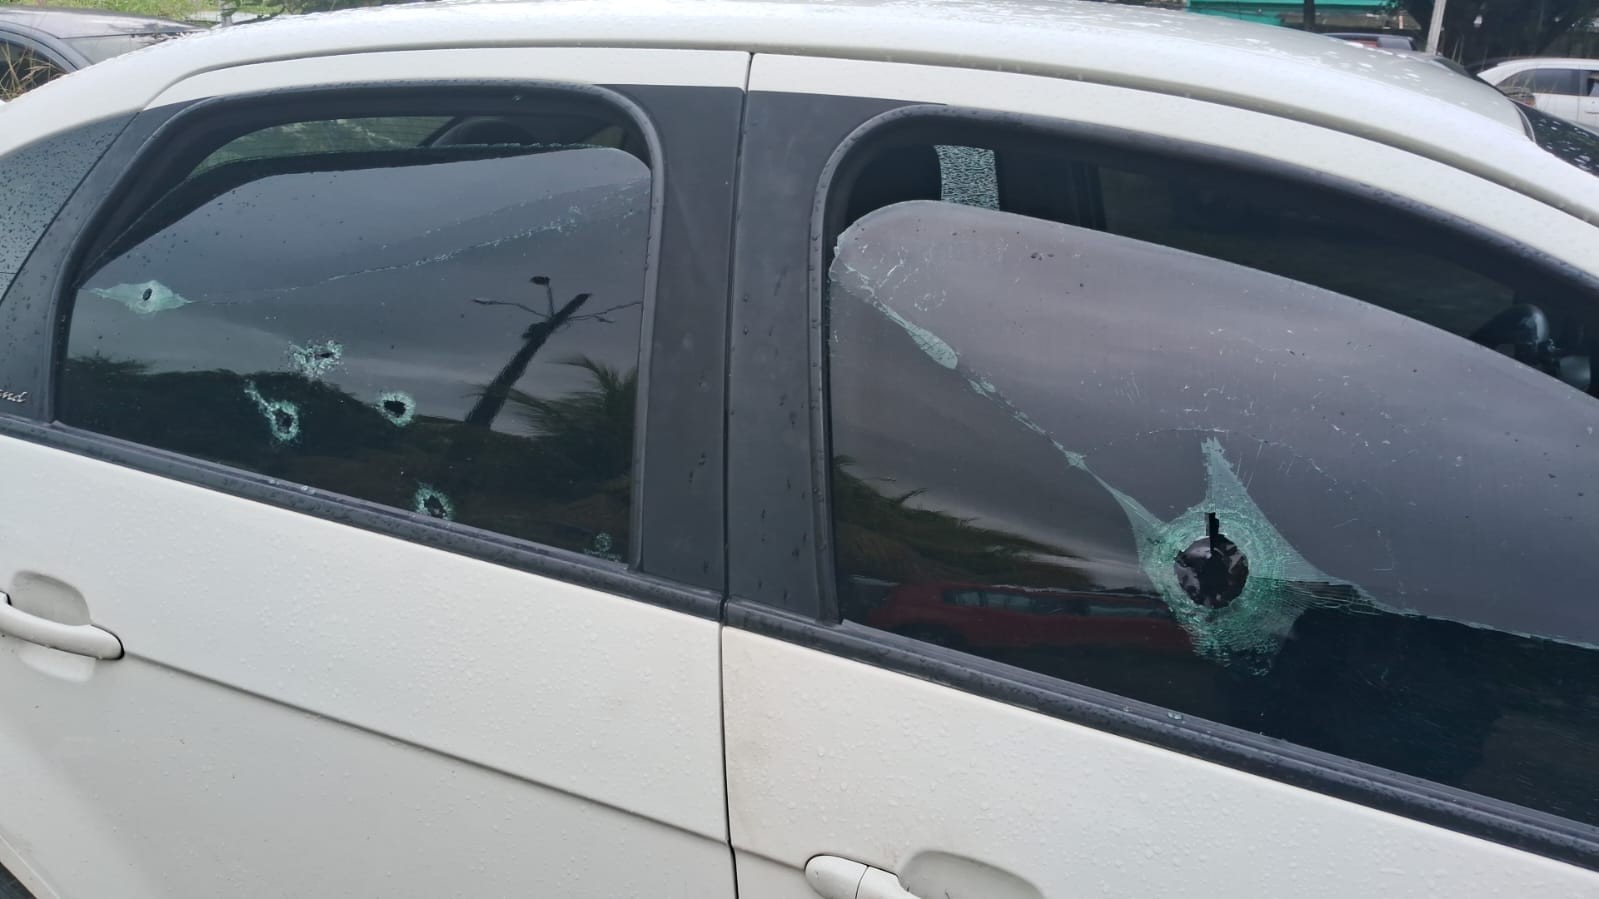 Passageira é morta a tiros dentro de carro de aplicativo durante corrida; criminosos fugiram após o crime 